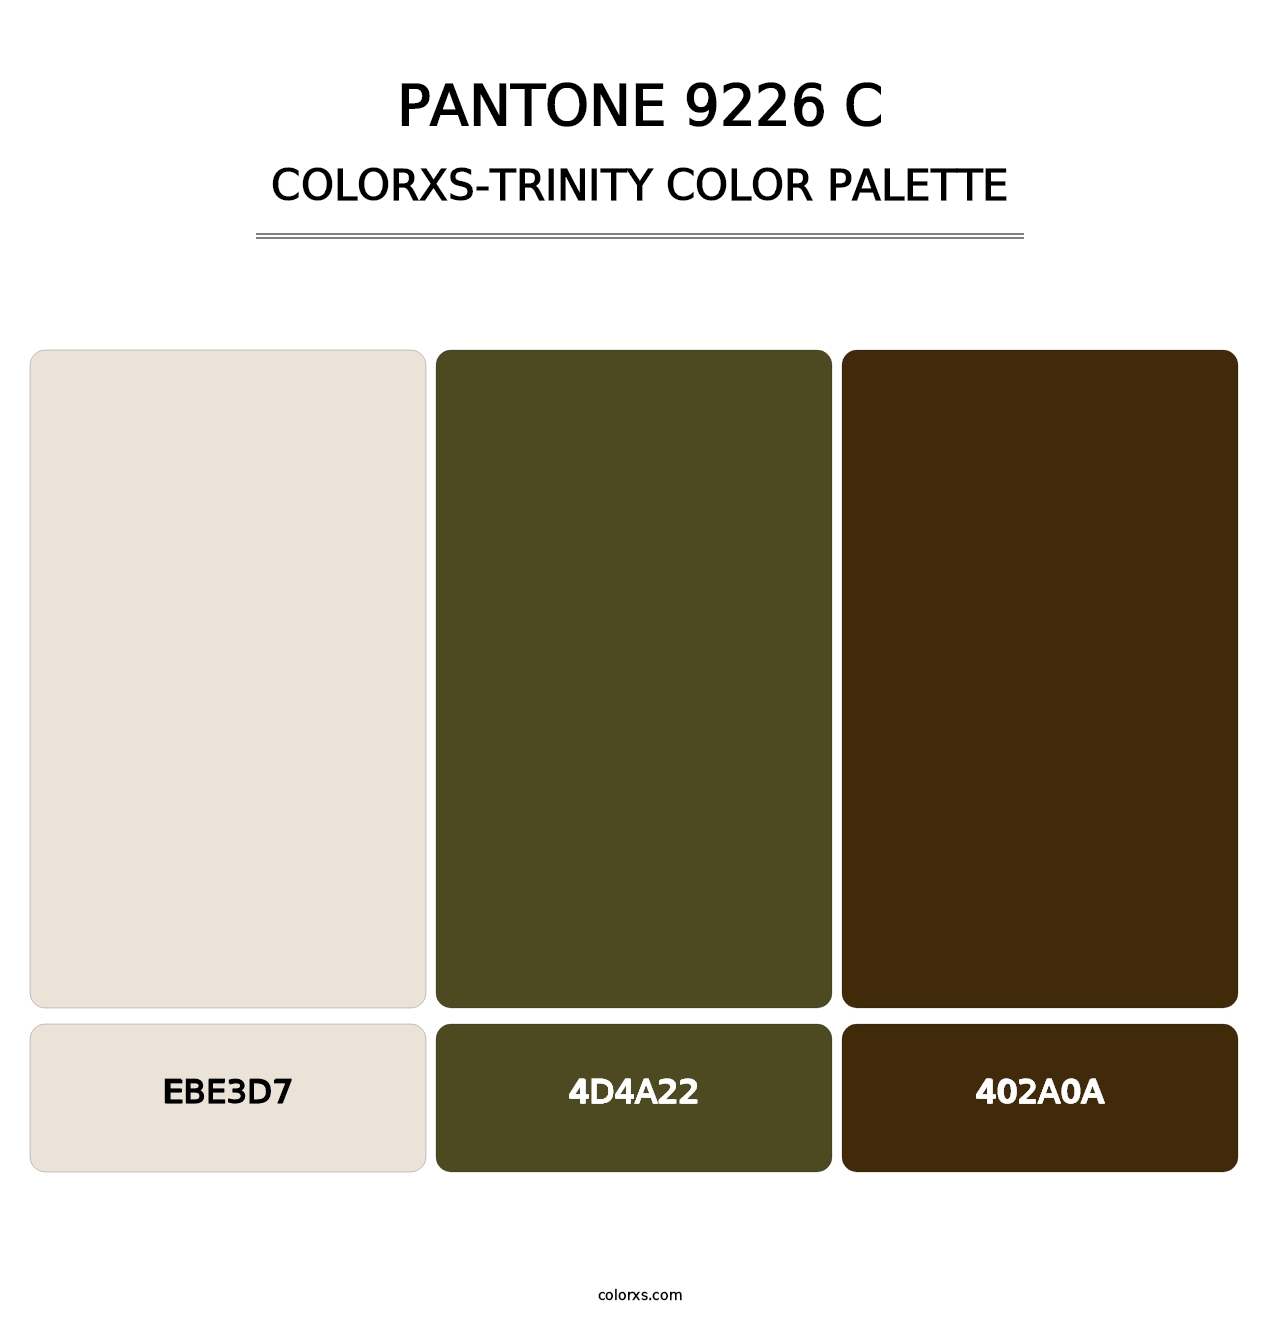 PANTONE 9226 C - Colorxs Trinity Palette